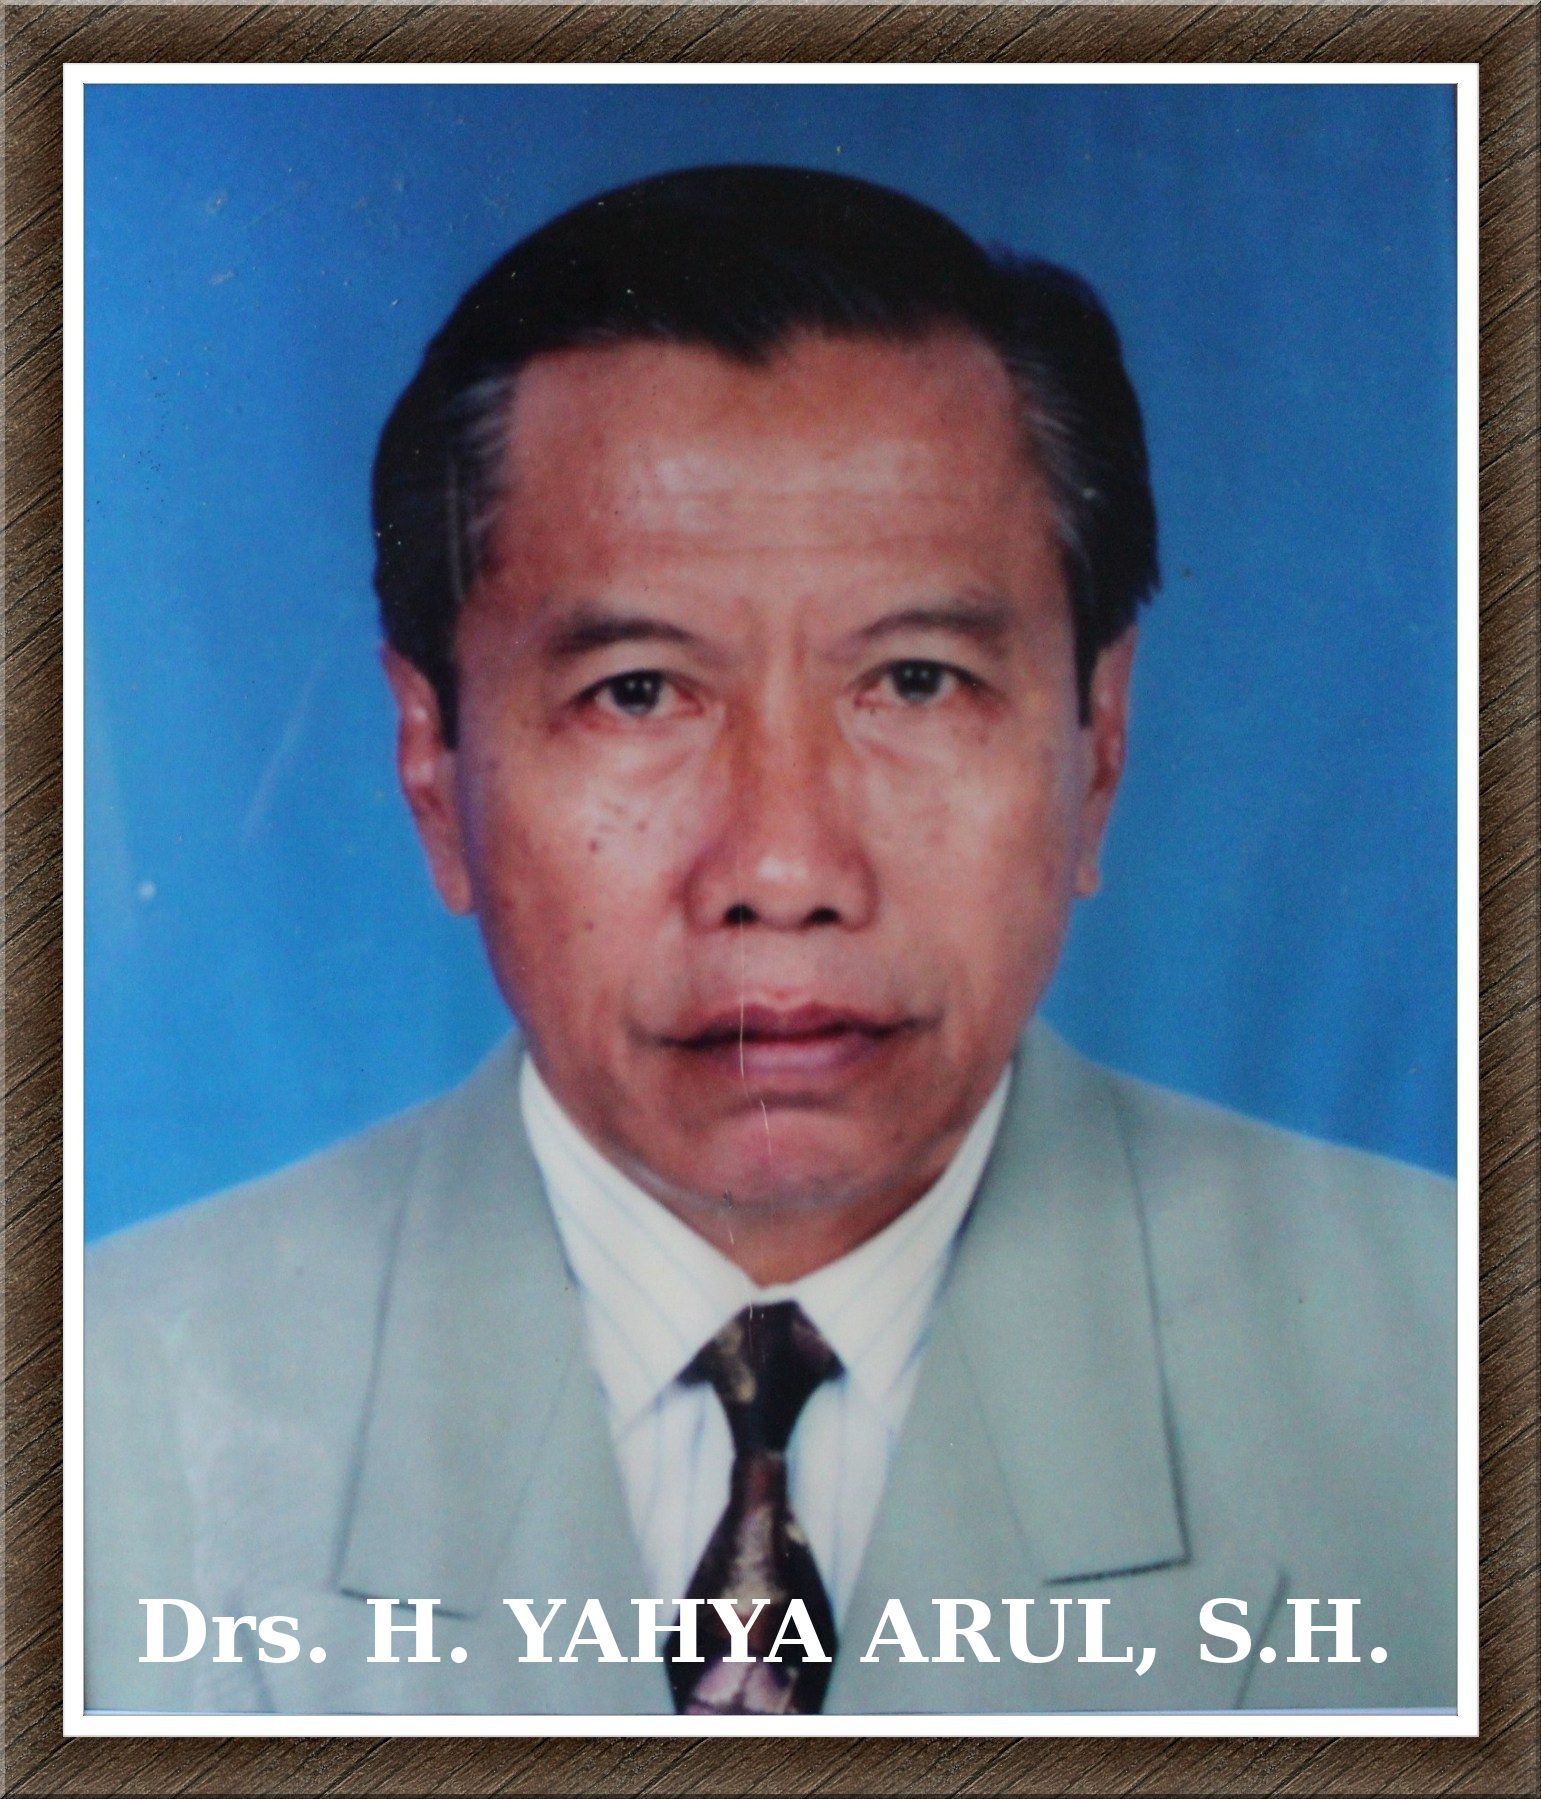 Drs. H. YAHYA ARUL S